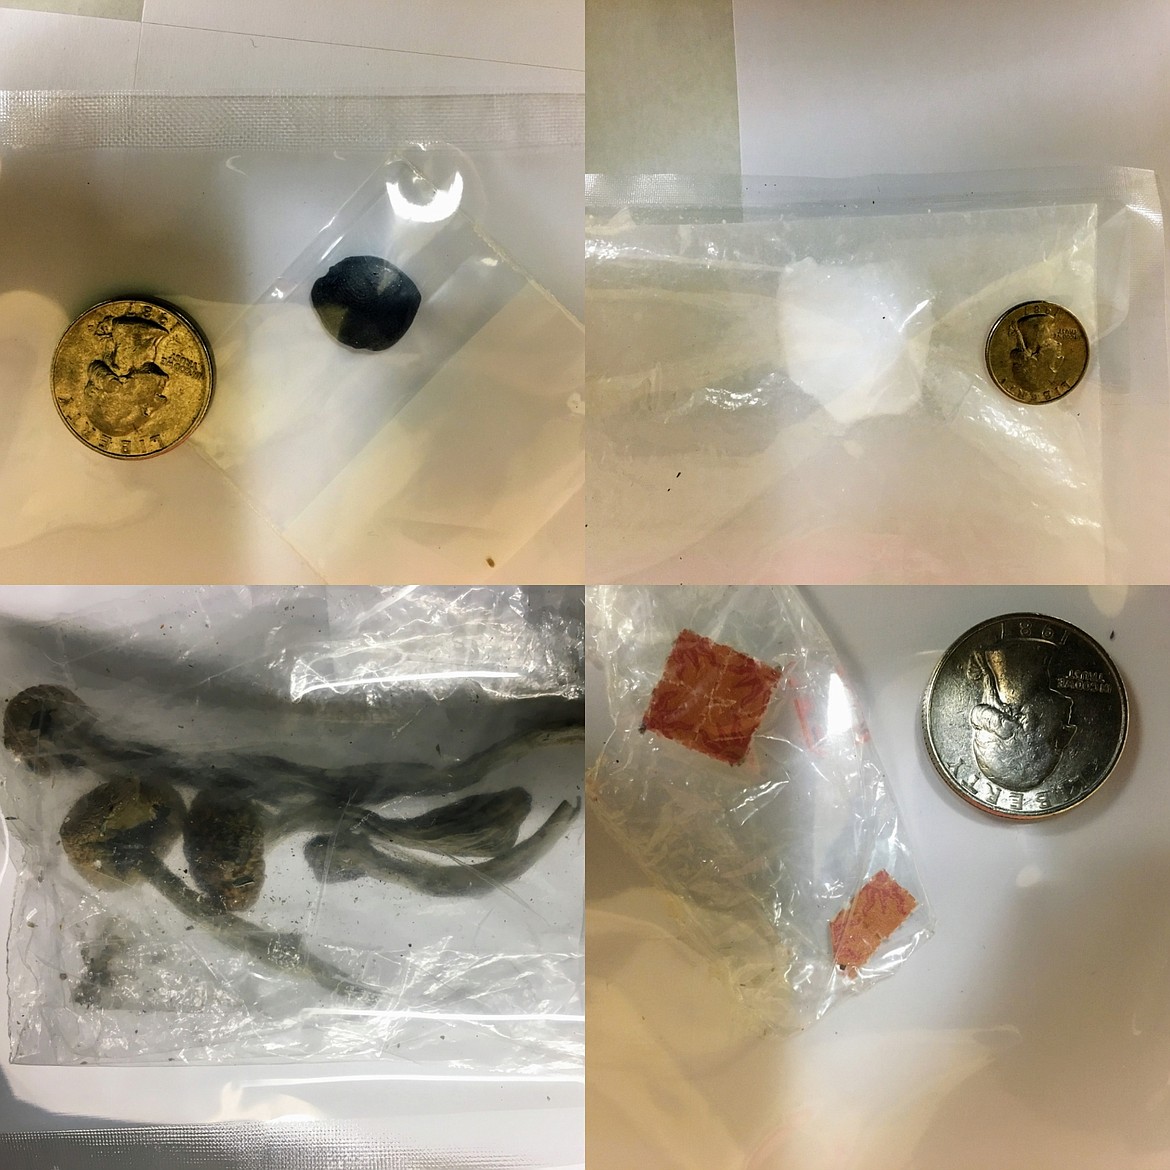 (Top left) Black Tar heroin. (Top right) 20 grams of cocaine. (Bottom left) psychedelic mushrooms. (Bottom right) LSD.